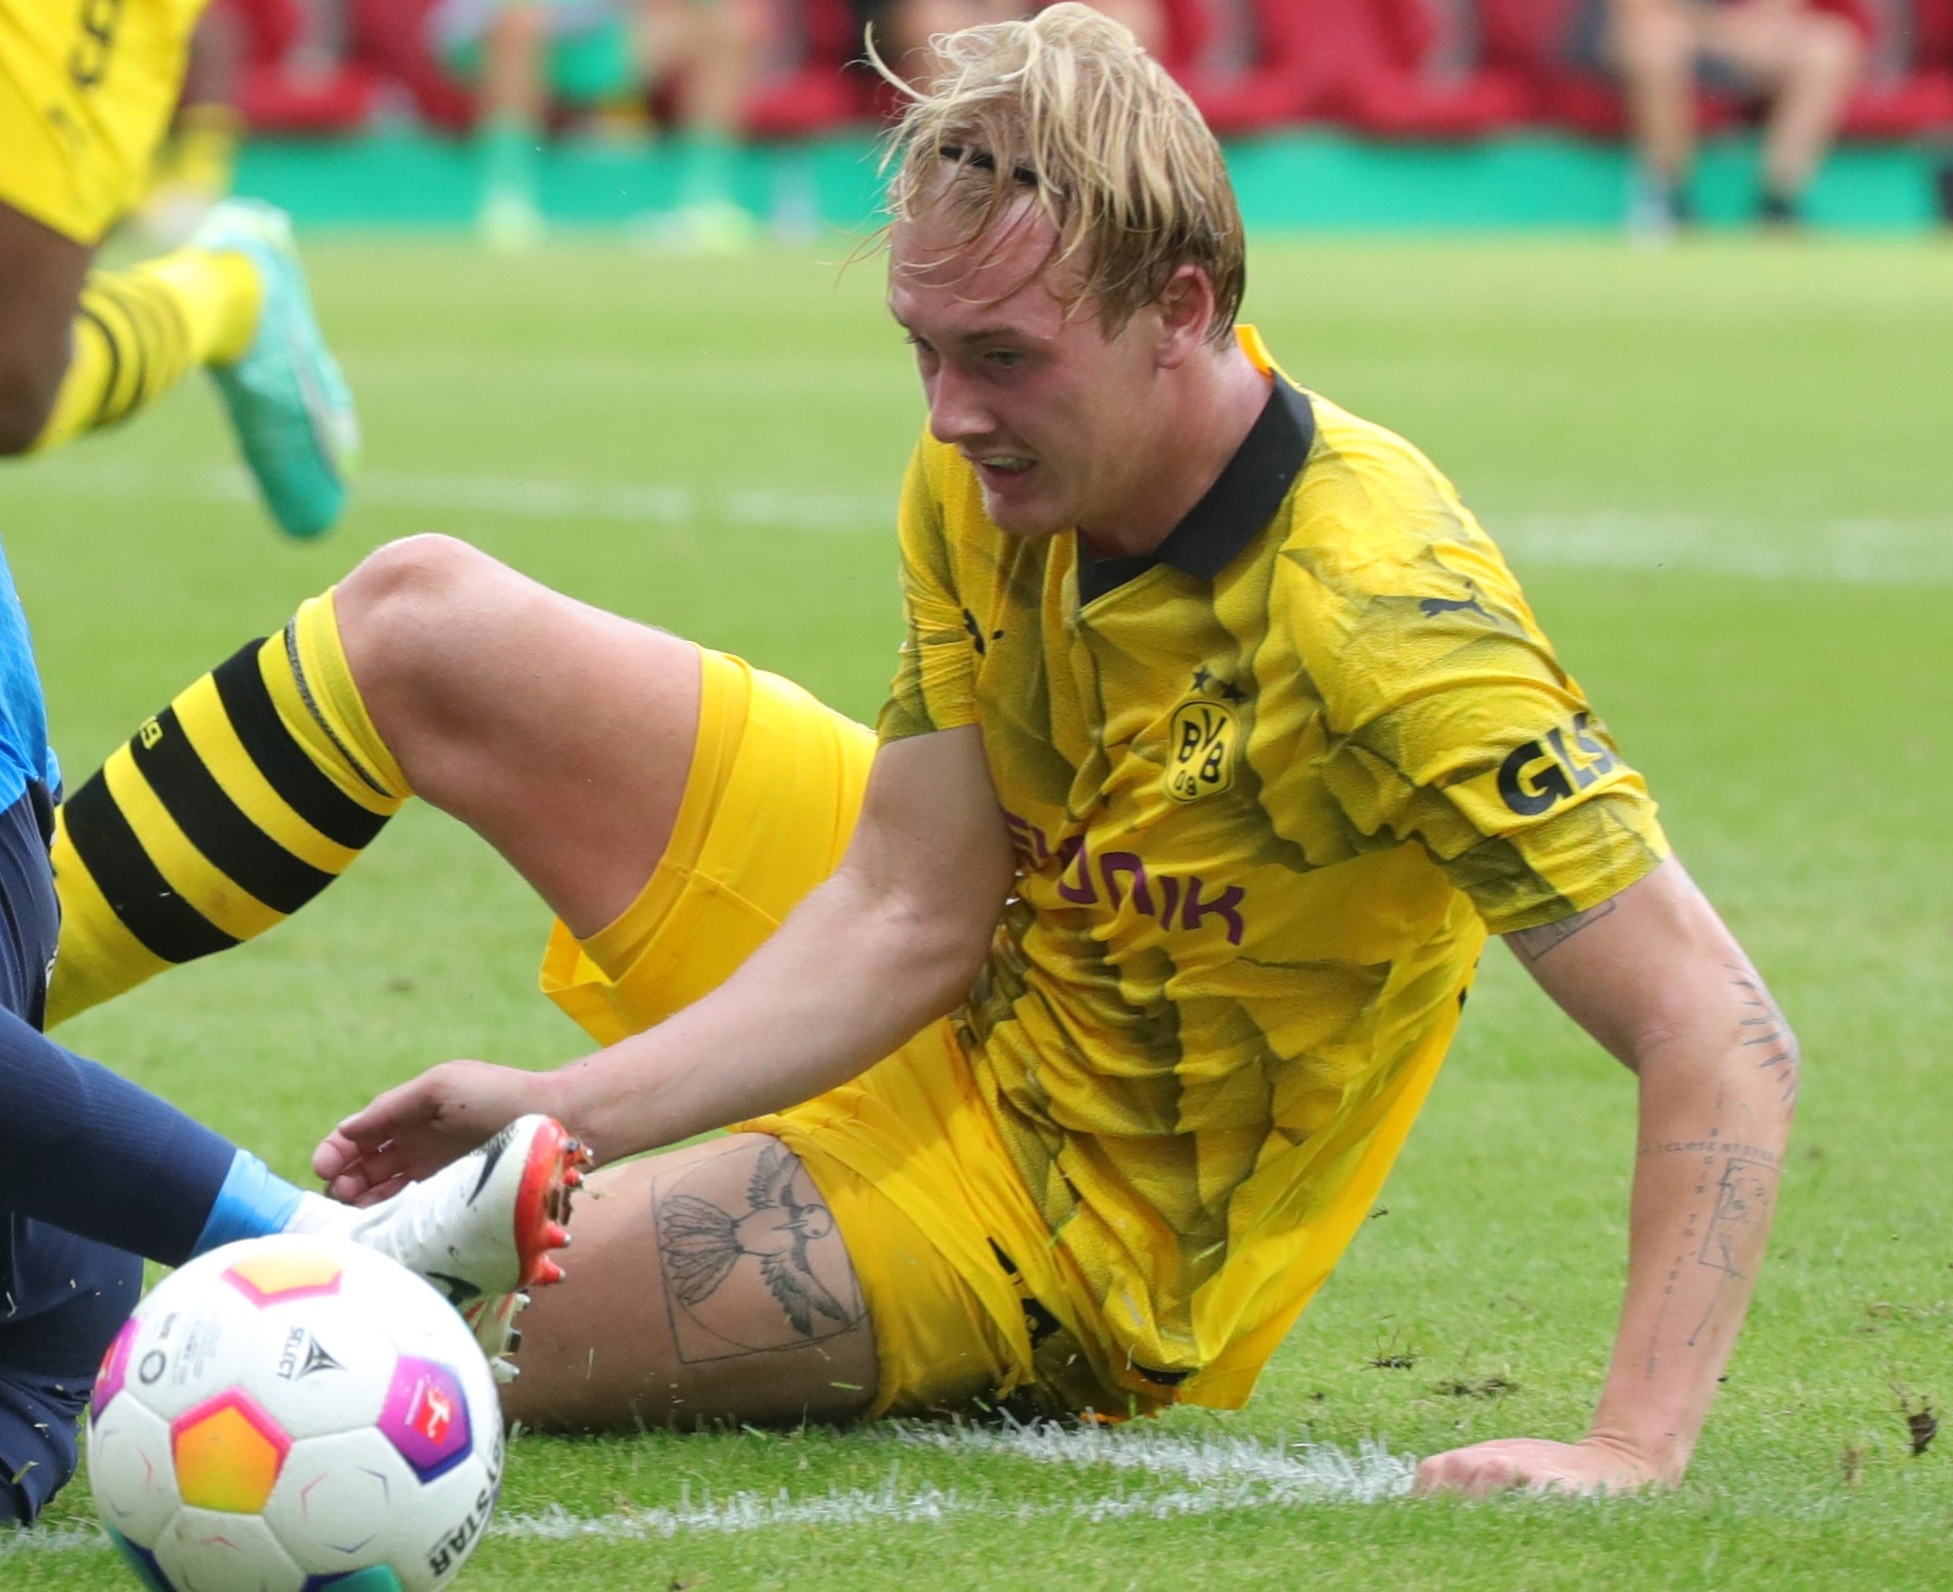 Kobel and Brandt doubtful for Dortmund's clash with Bochum